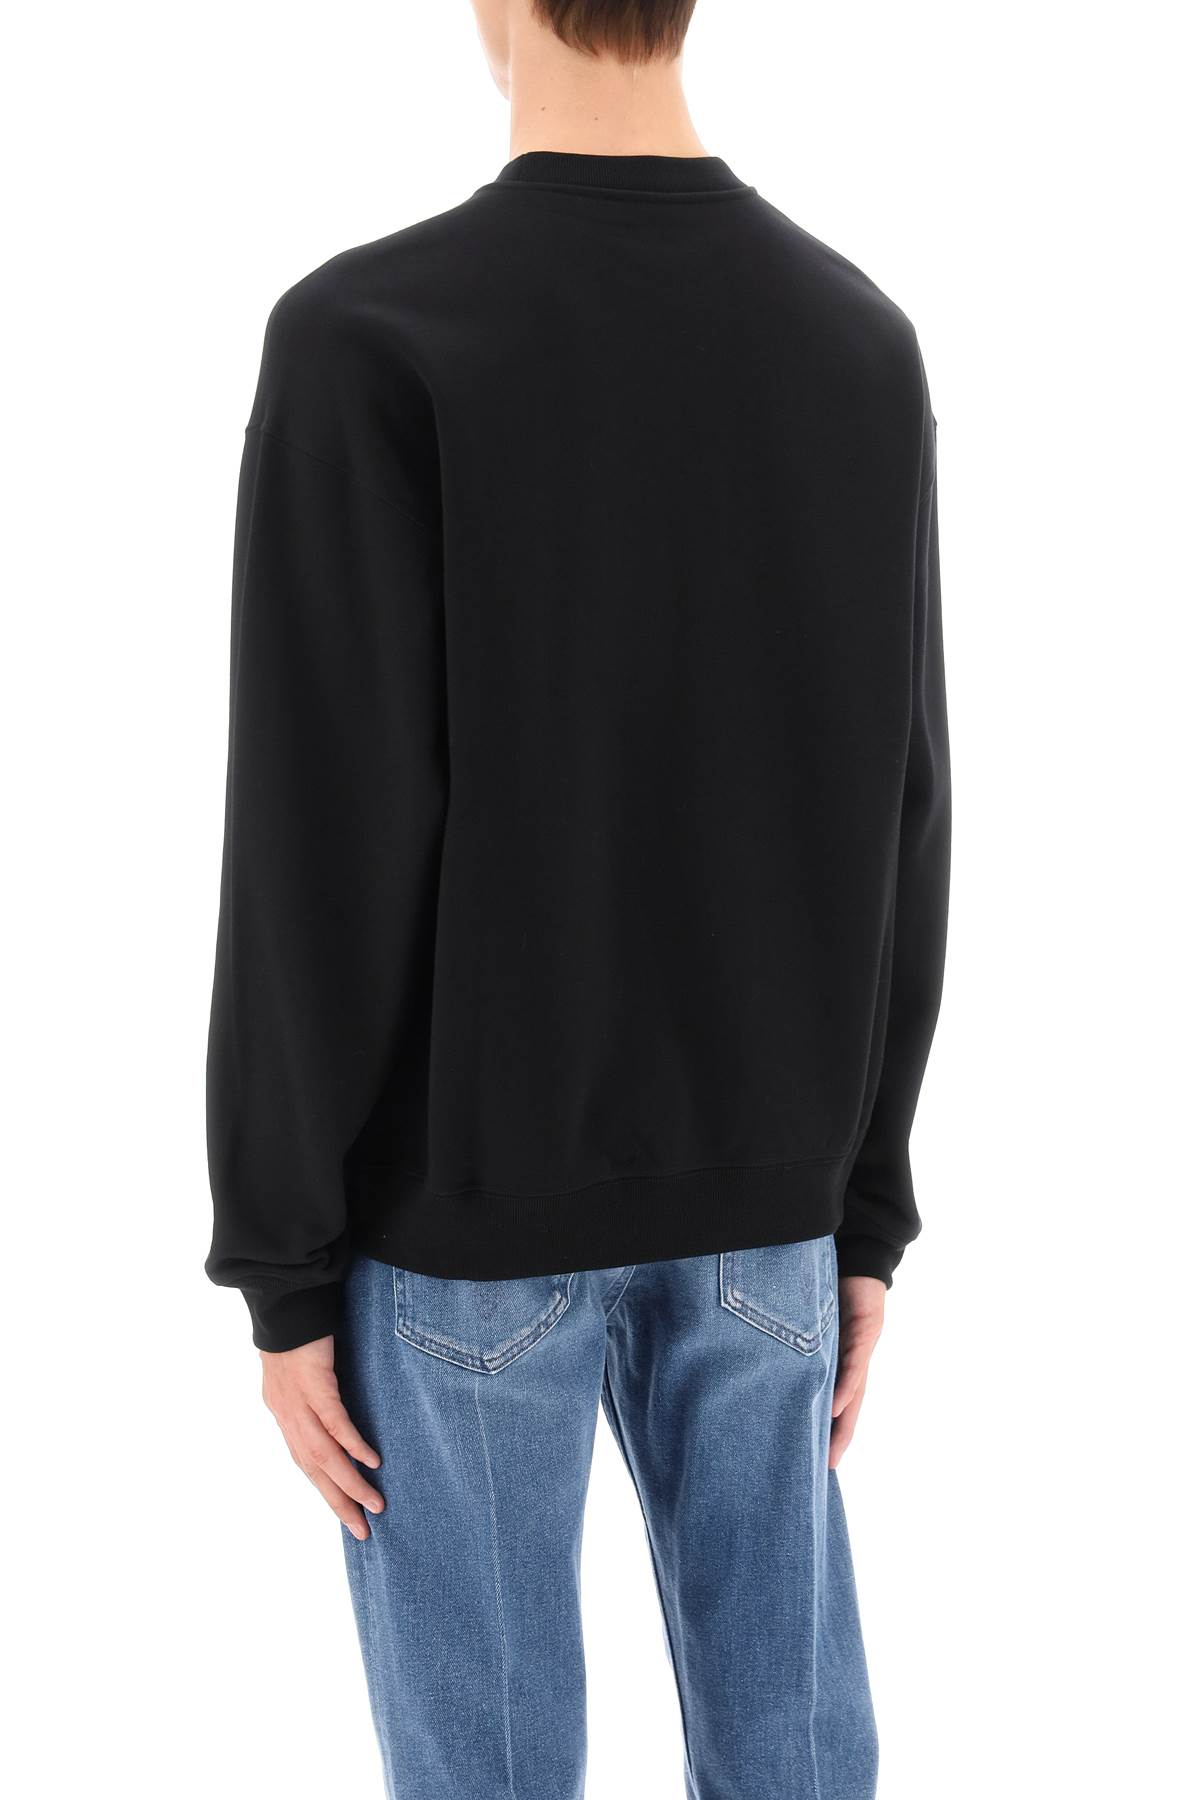 Shop Versace Crew-neck Sweatshirt With City Lights Print In Black Print (black)